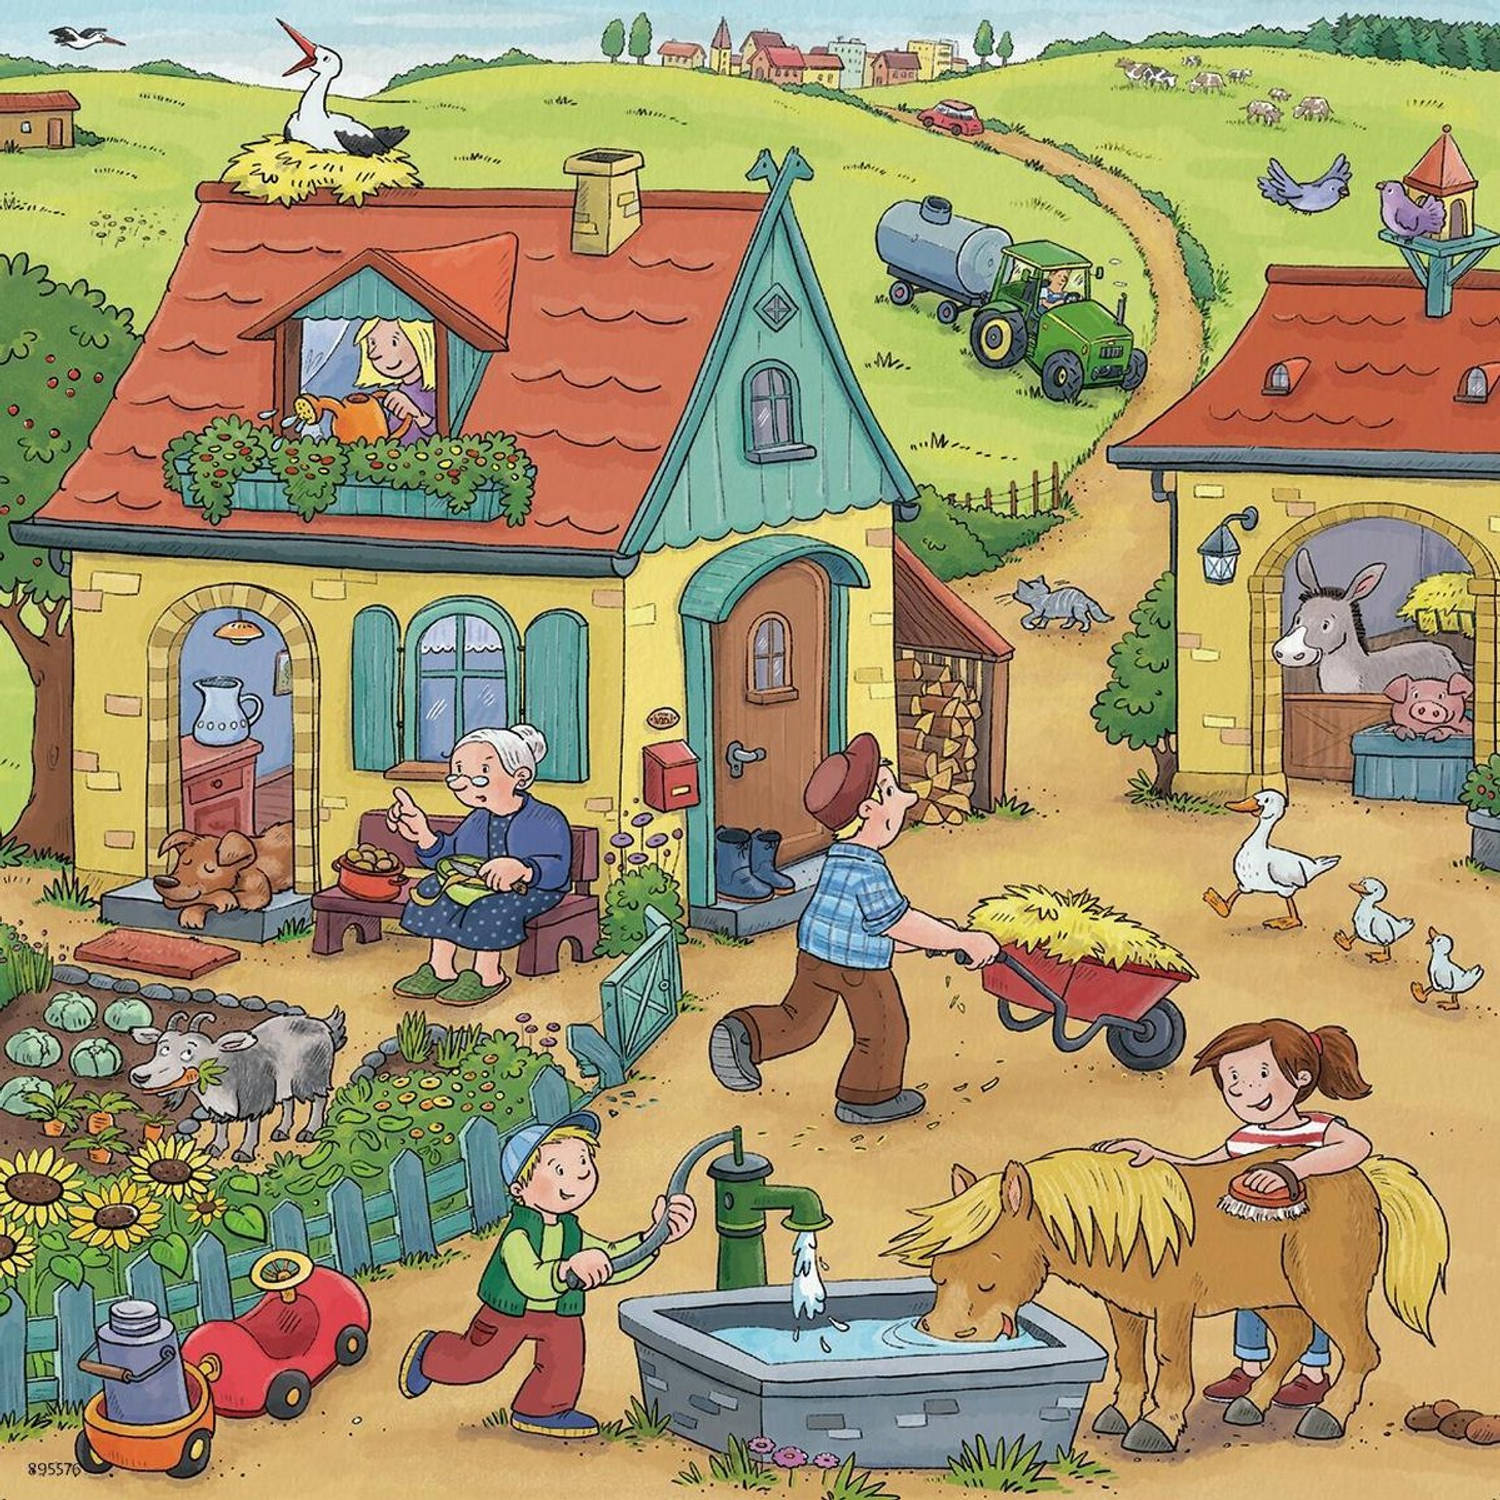 Ravensburger puzzel boerderij 3x49pcs